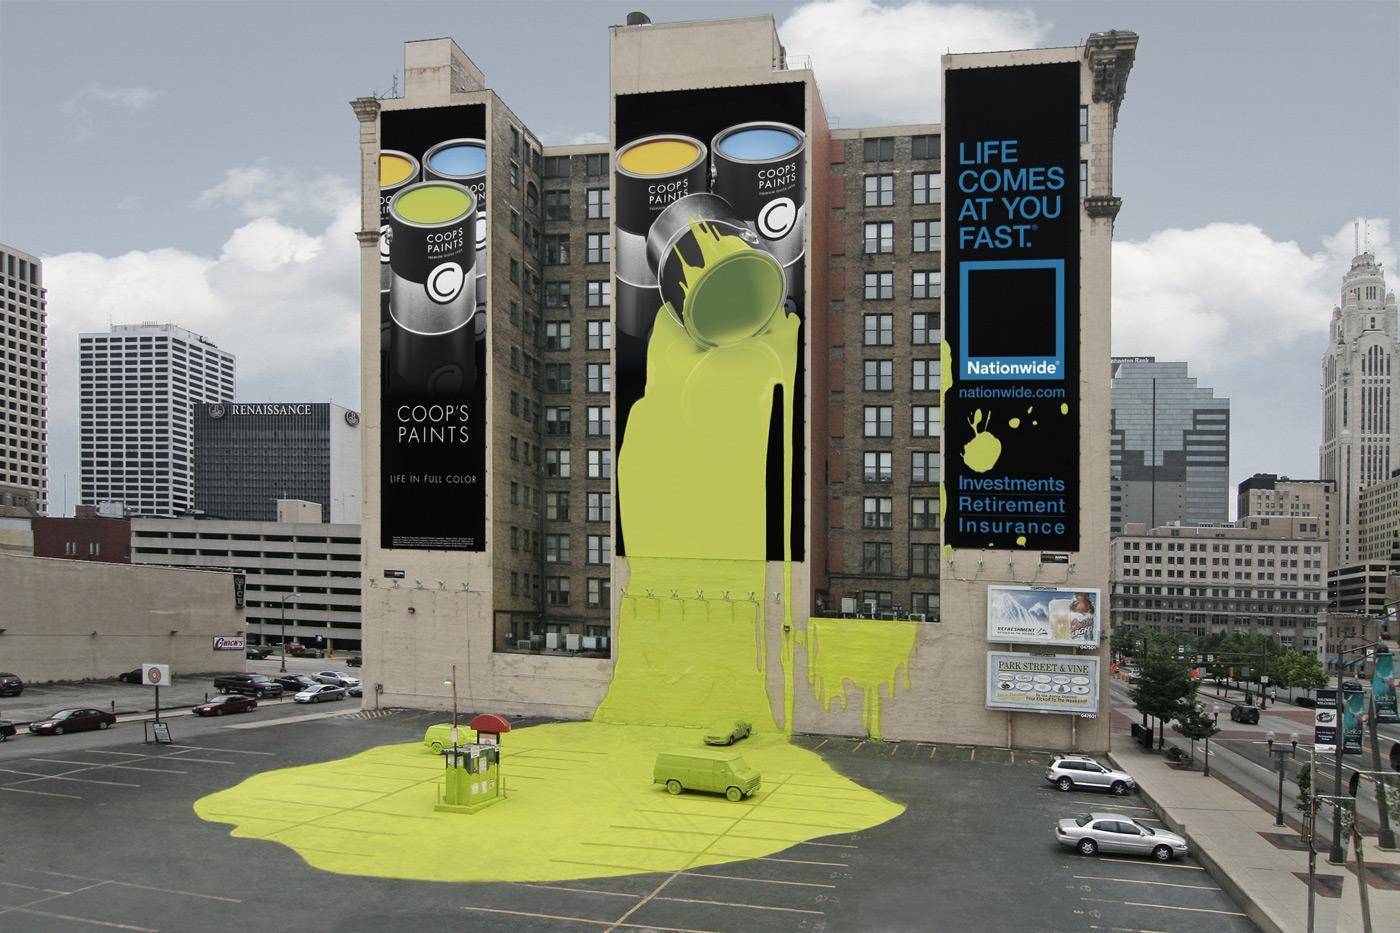 Billboard of paint spills onto parking lot